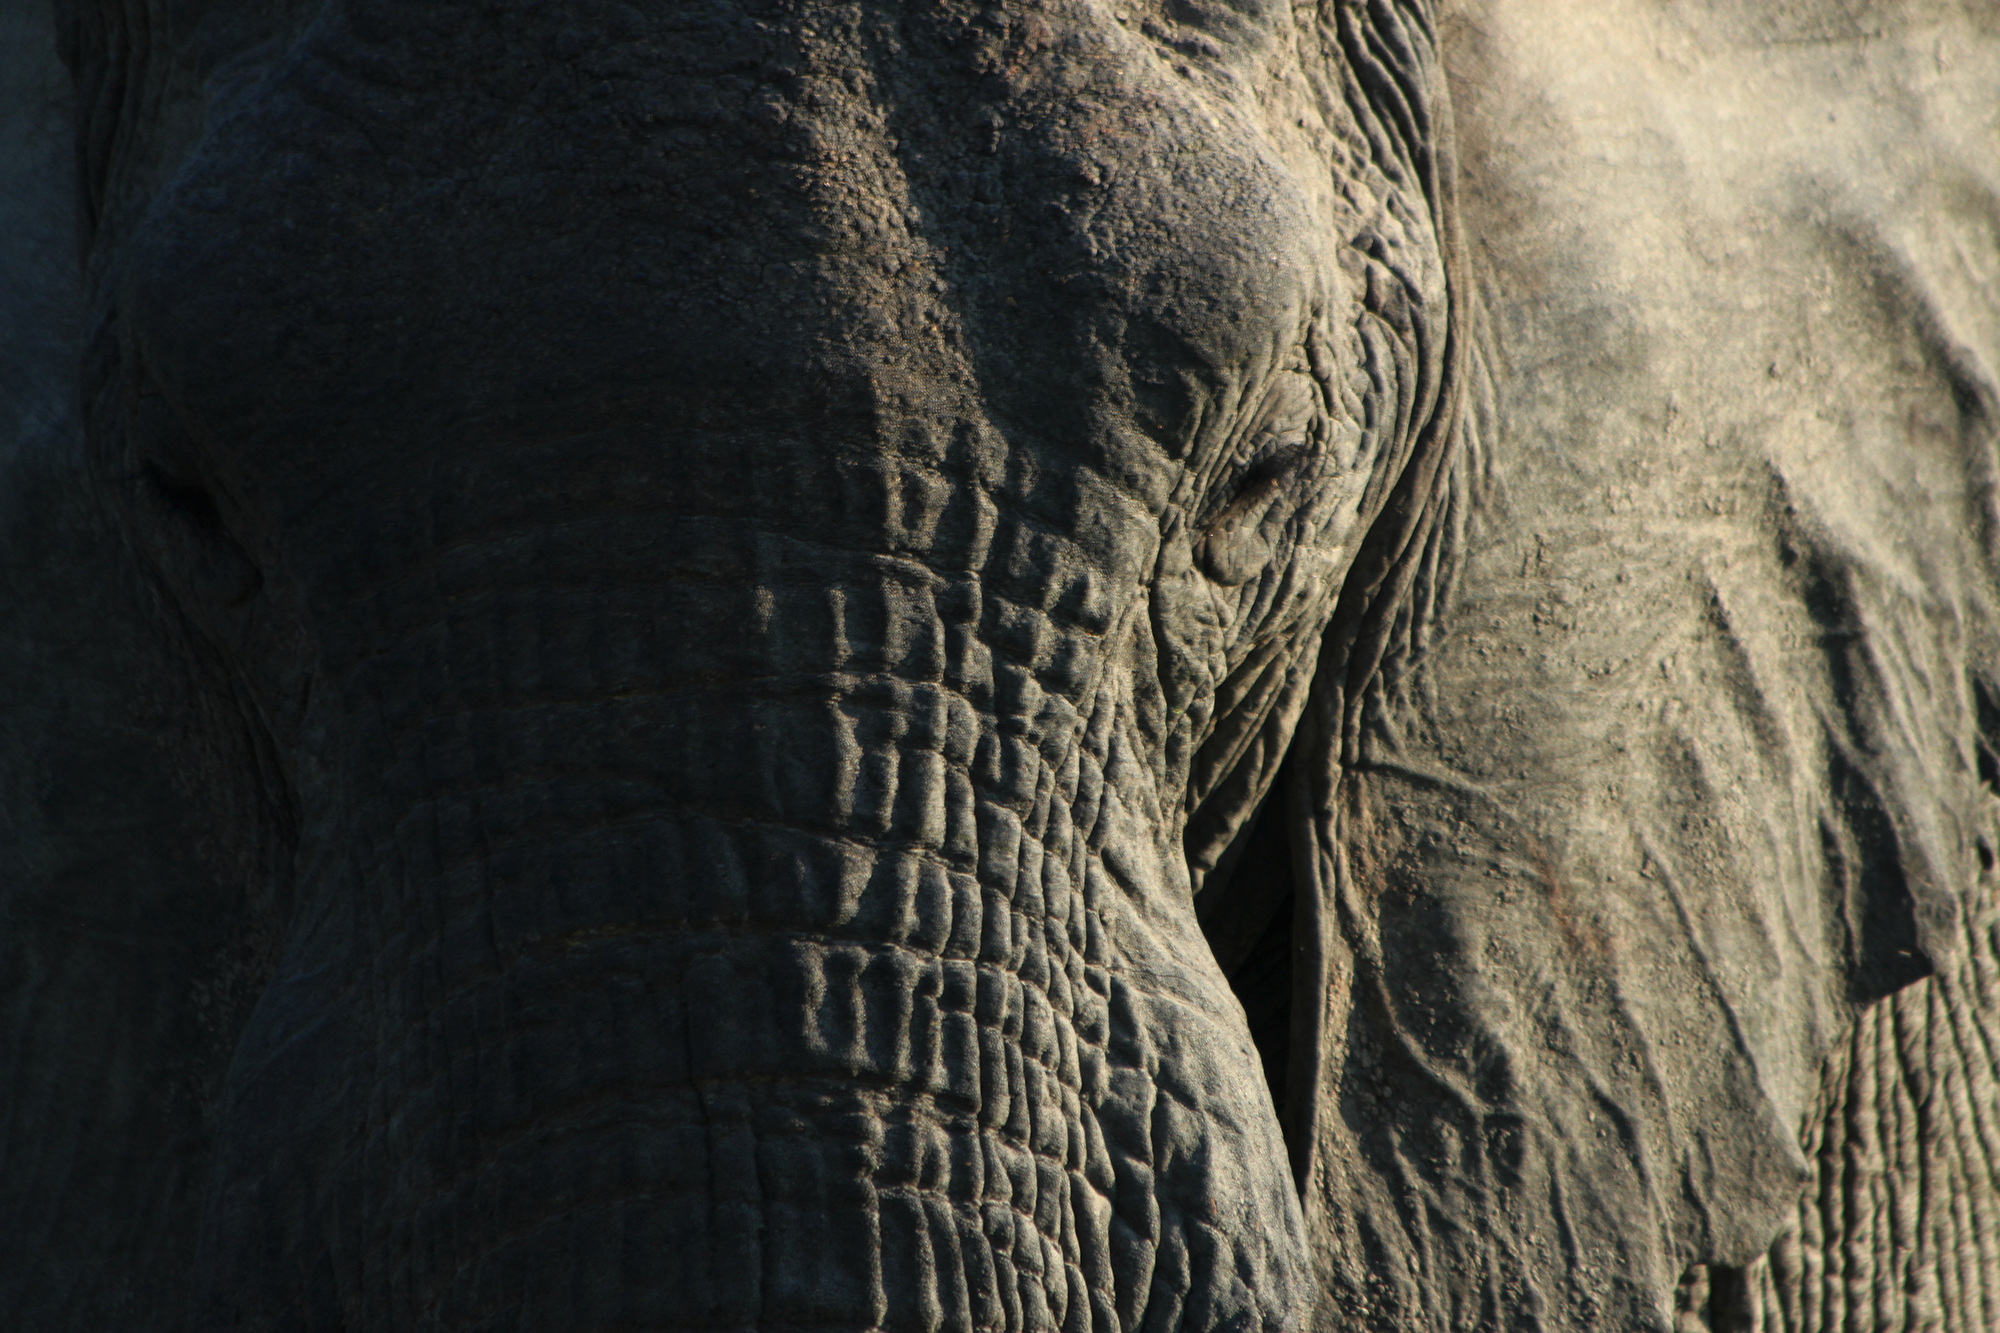 Africa conservation adventure images elephant travellivelearn.com